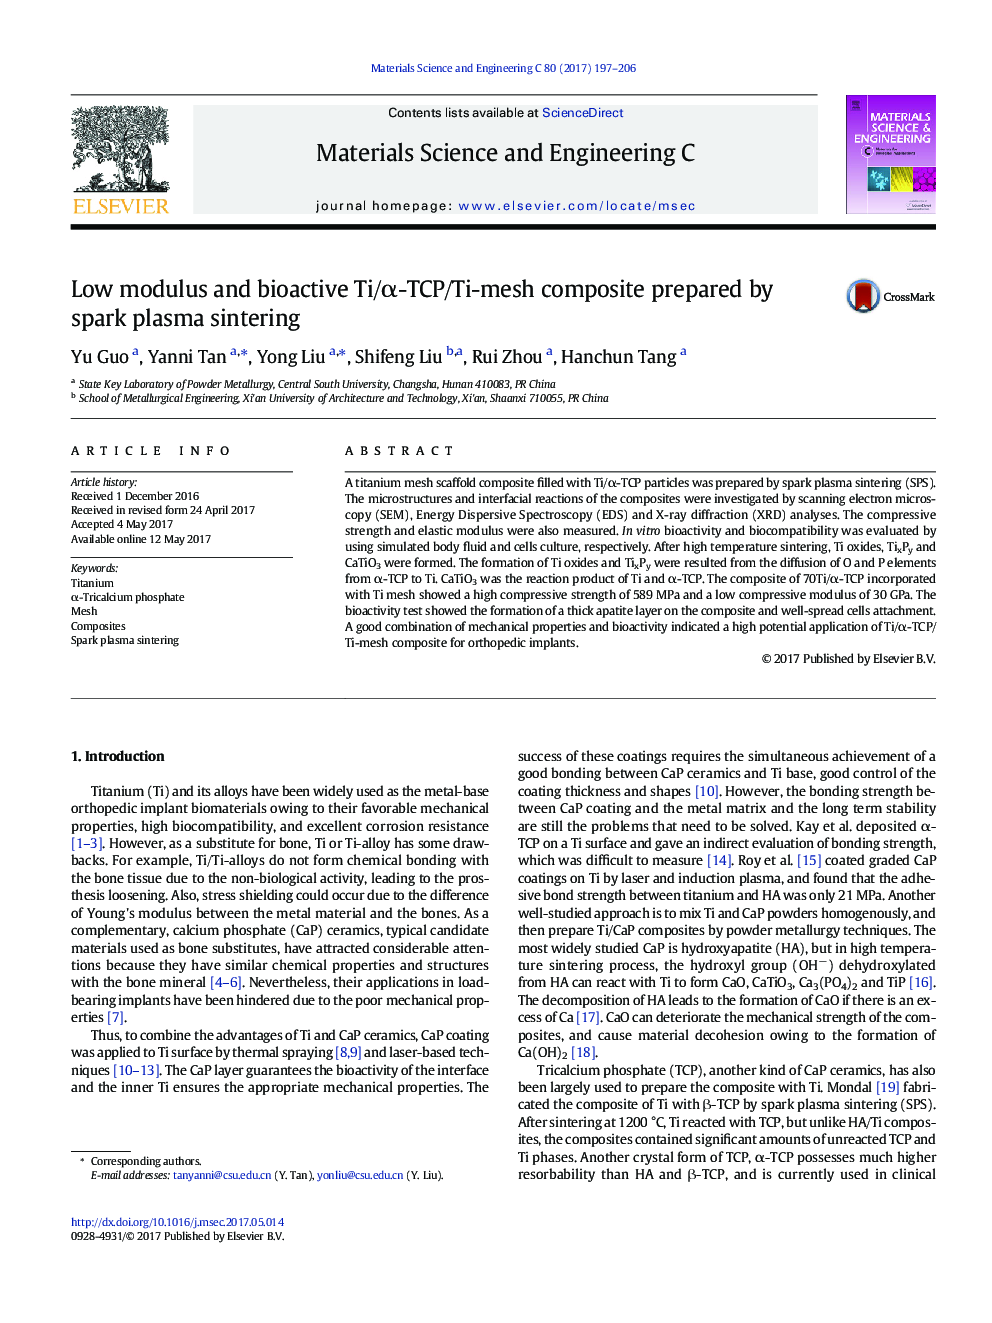 Low modulus and bioactive Ti/Î±-TCP/Ti-mesh composite prepared by spark plasma sintering